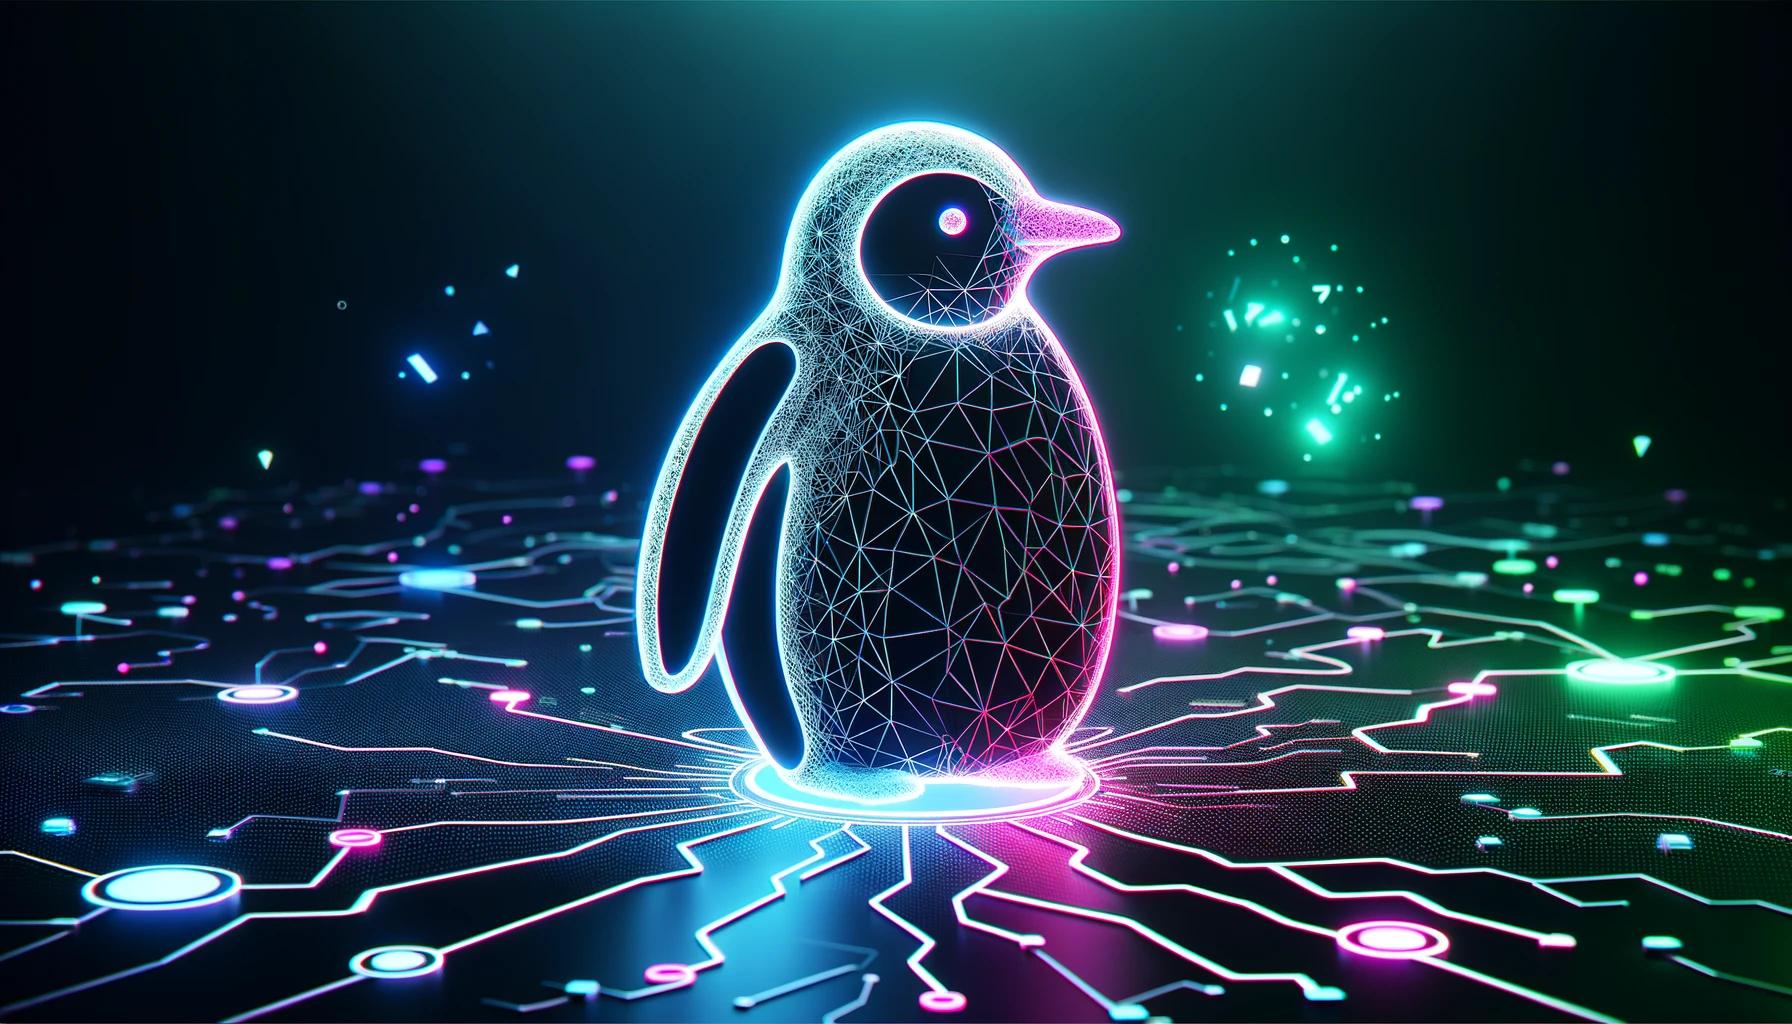 Pudgy Penguins宣布建立势不可挡的域名合作伙伴关系和沃尔玛扩张